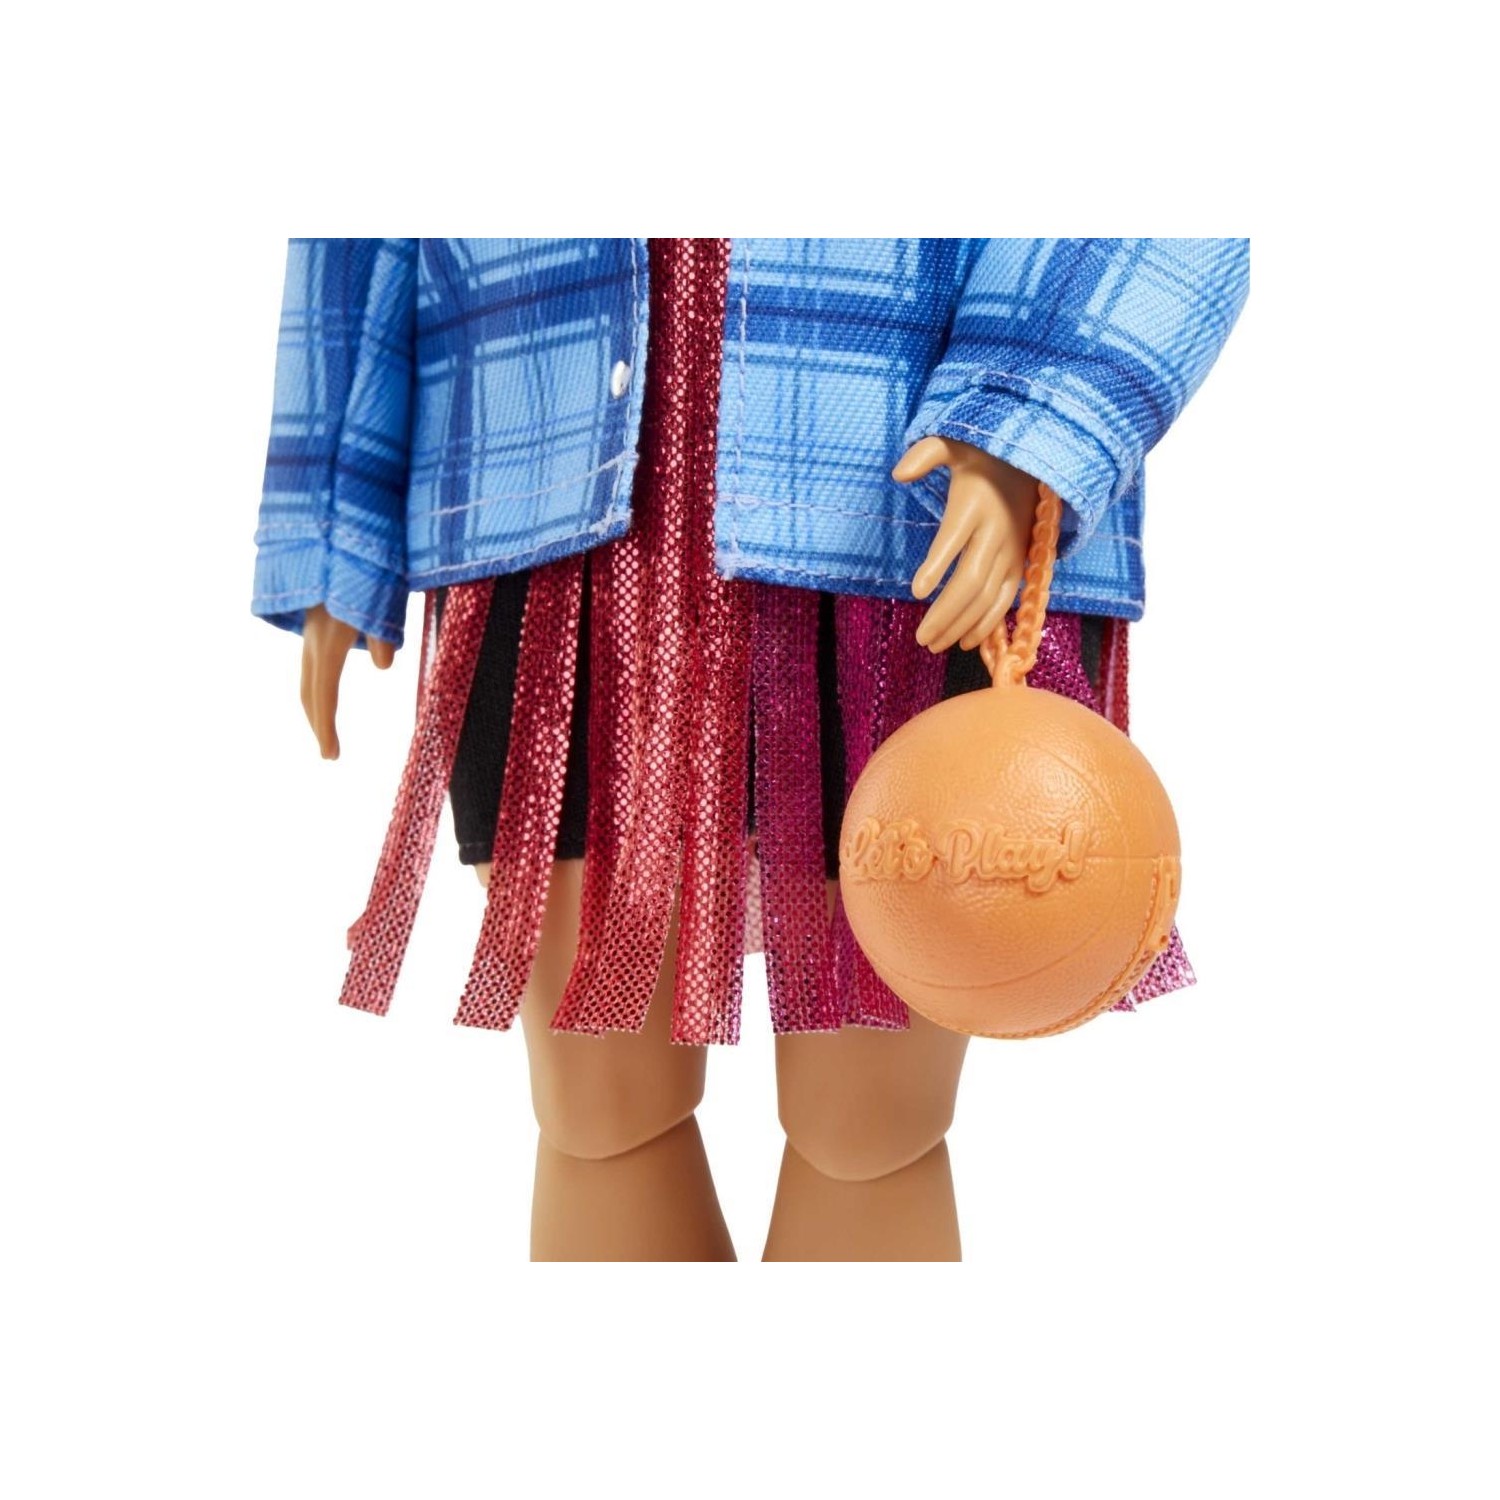 Кукла Barbie Extra Baby in Plaid Jacket, Corgi Dog HDJ46 кукла barbie в клетчатой куртке hdj46